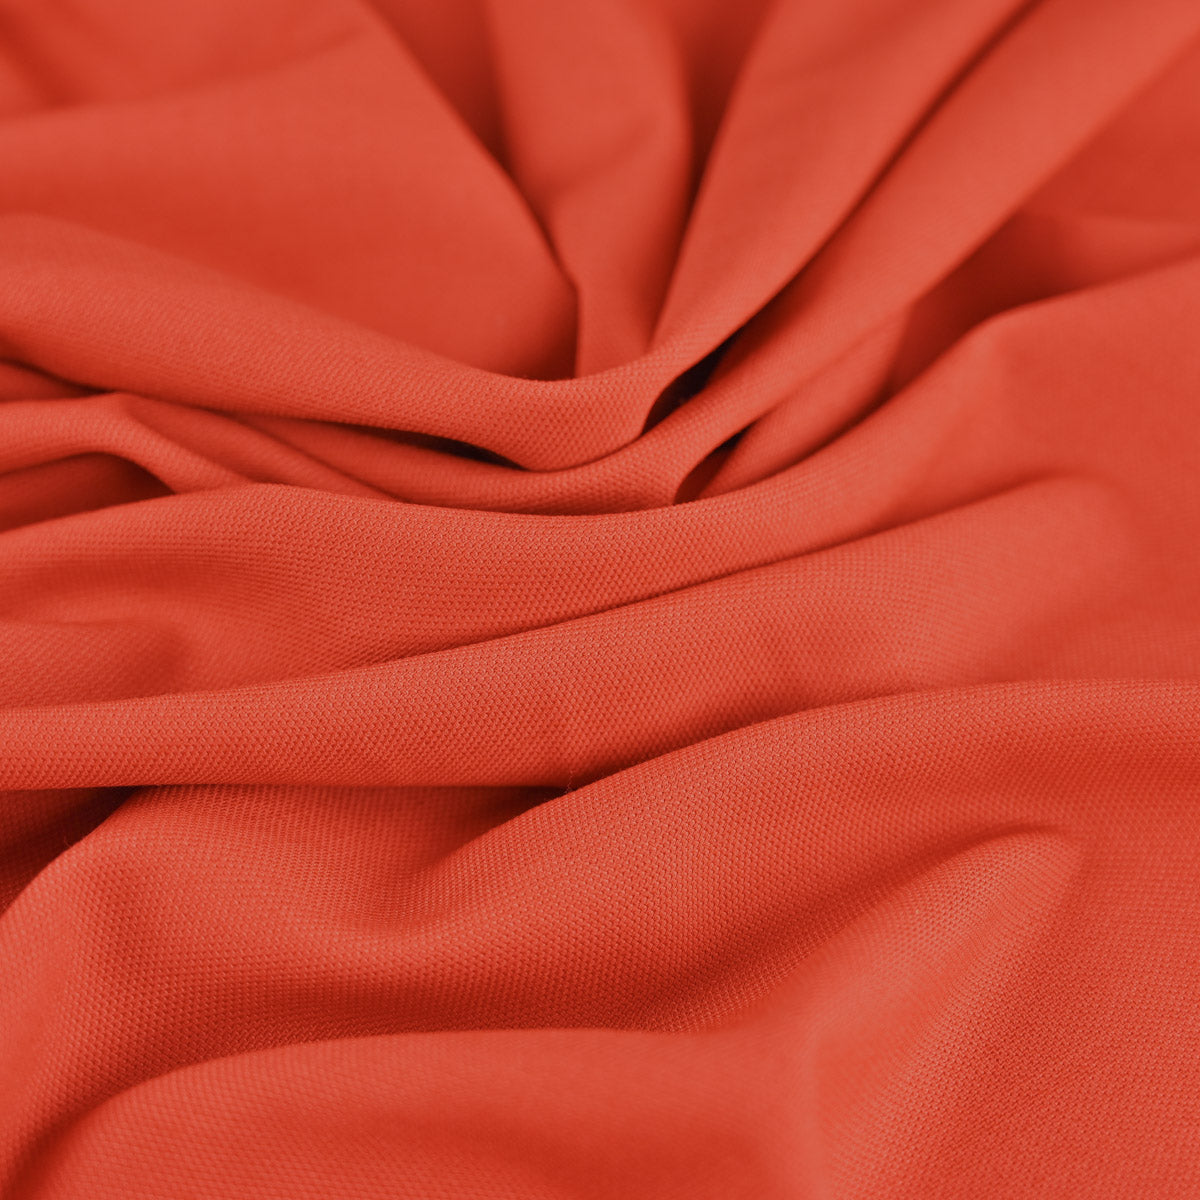 Orange Fancy Canvas Fabric 4233